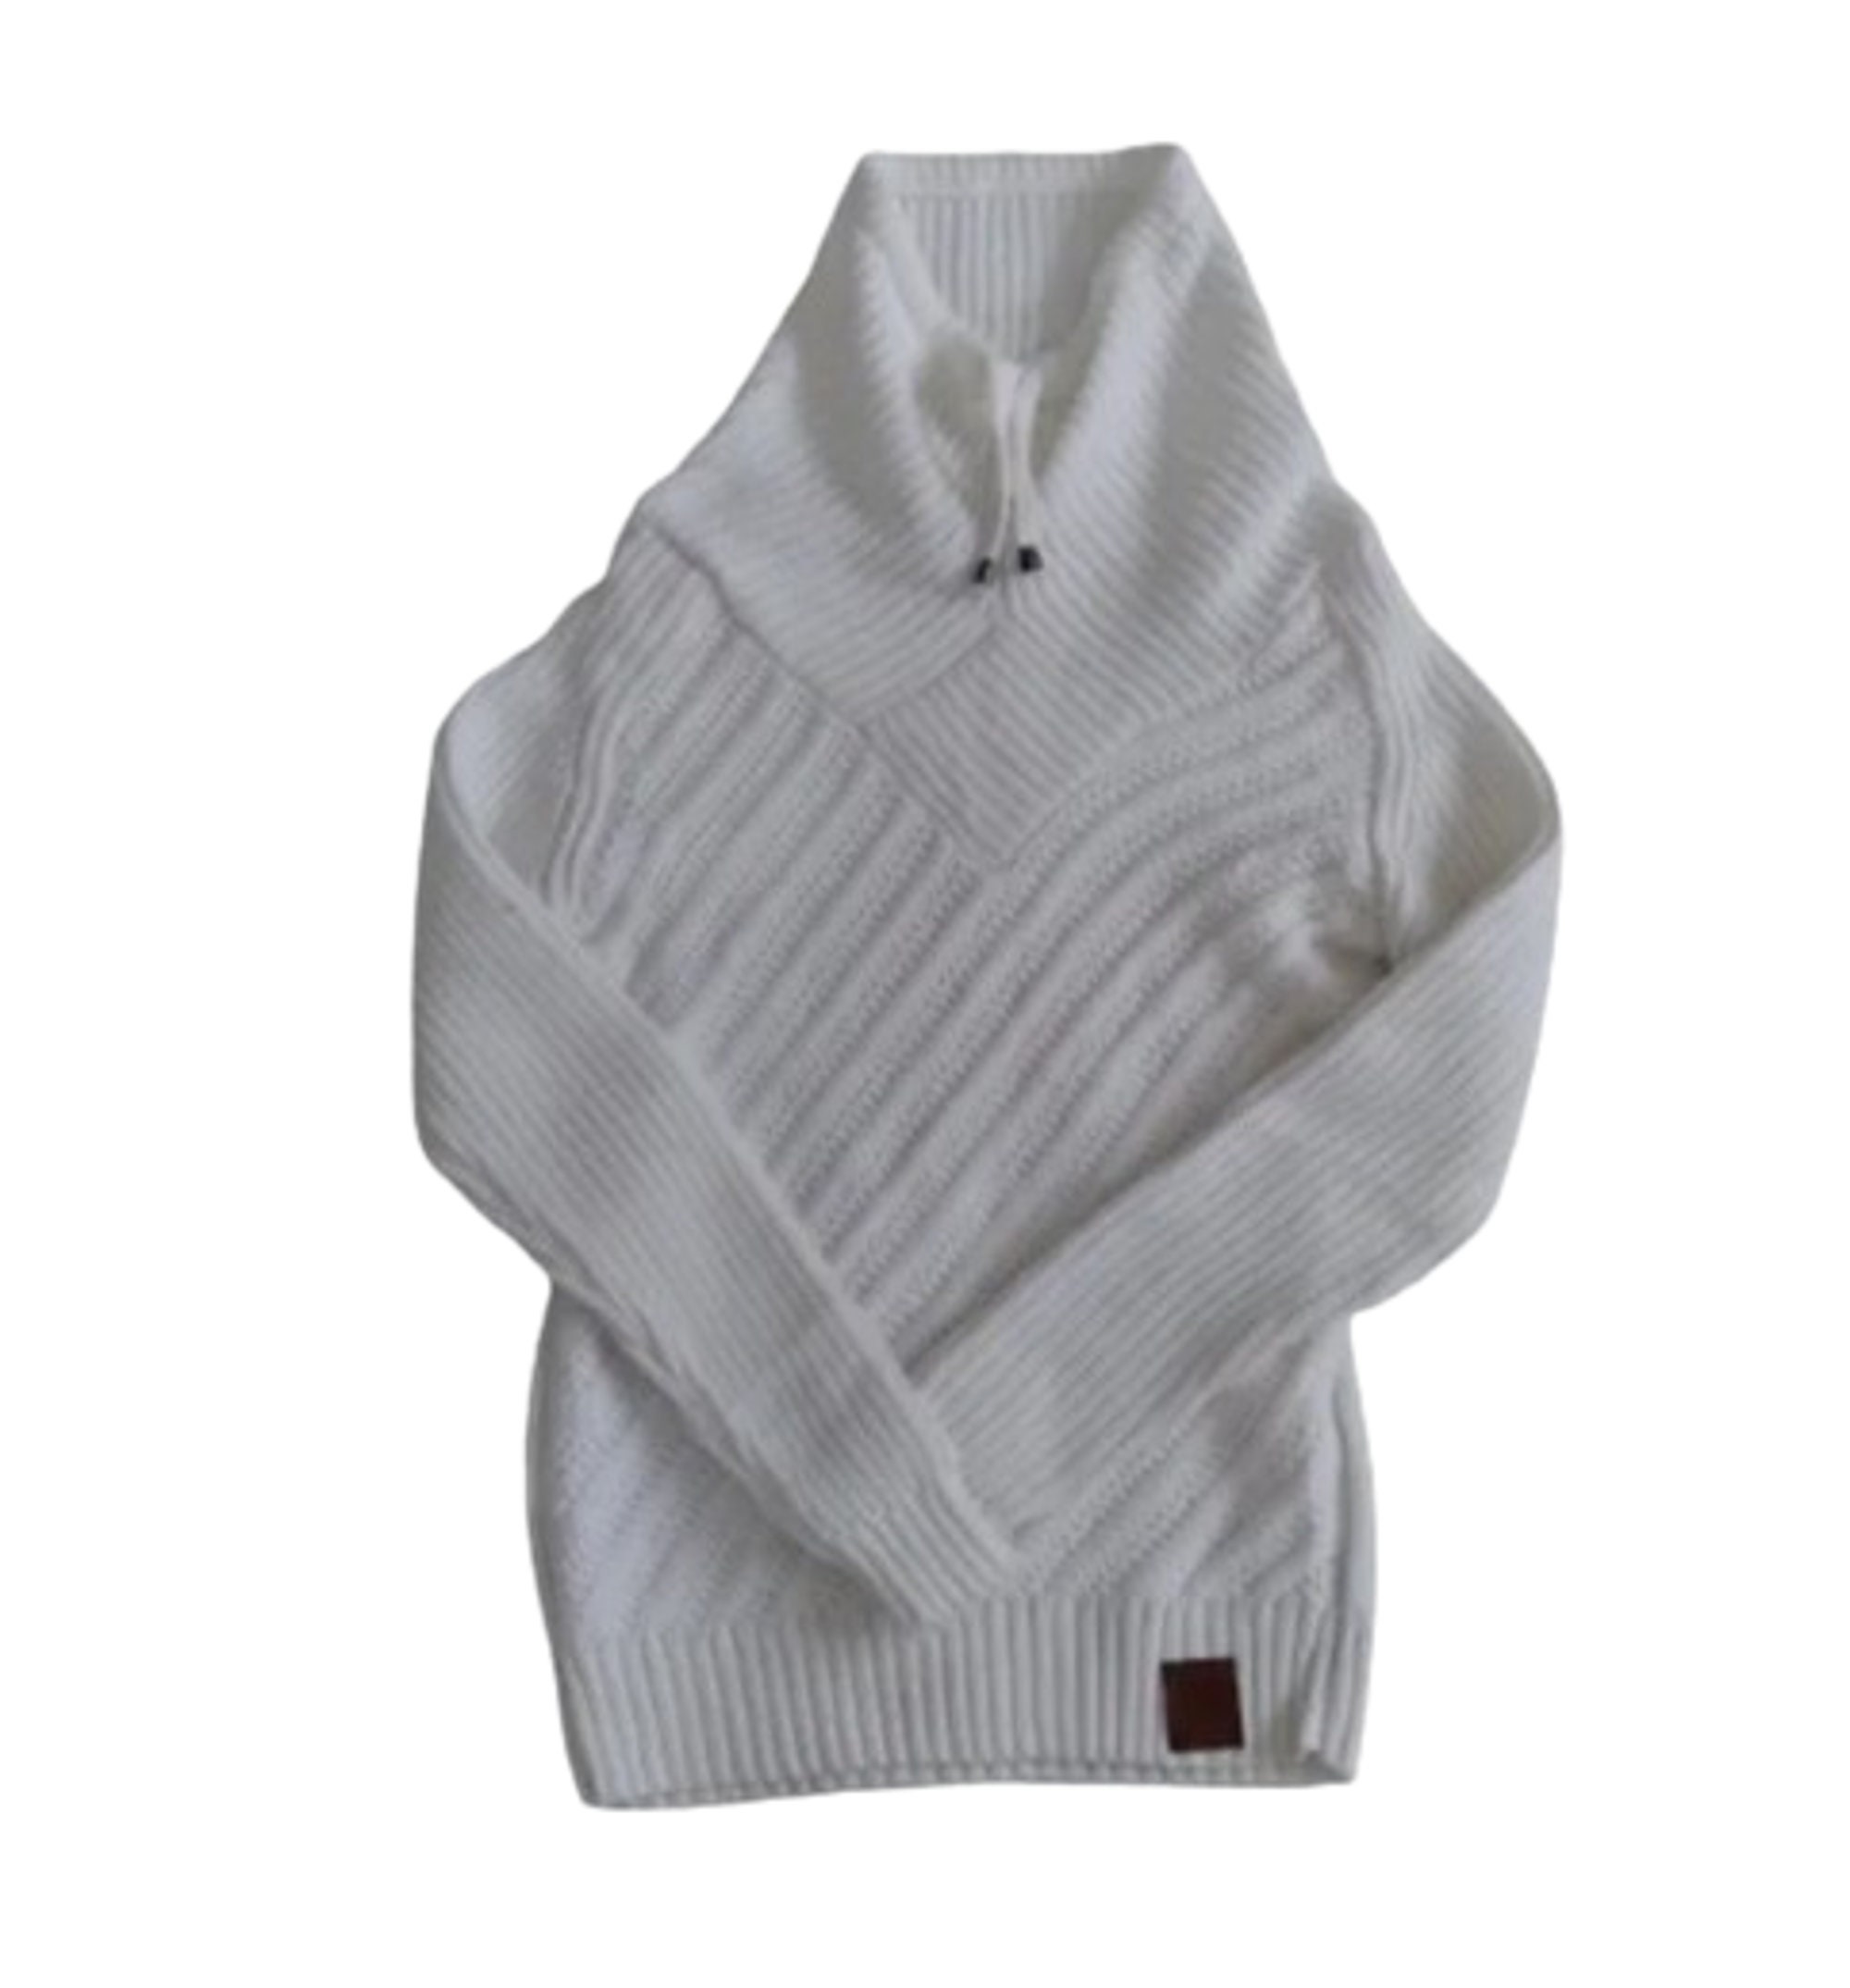 White Turtleneck Sweater -  Canada